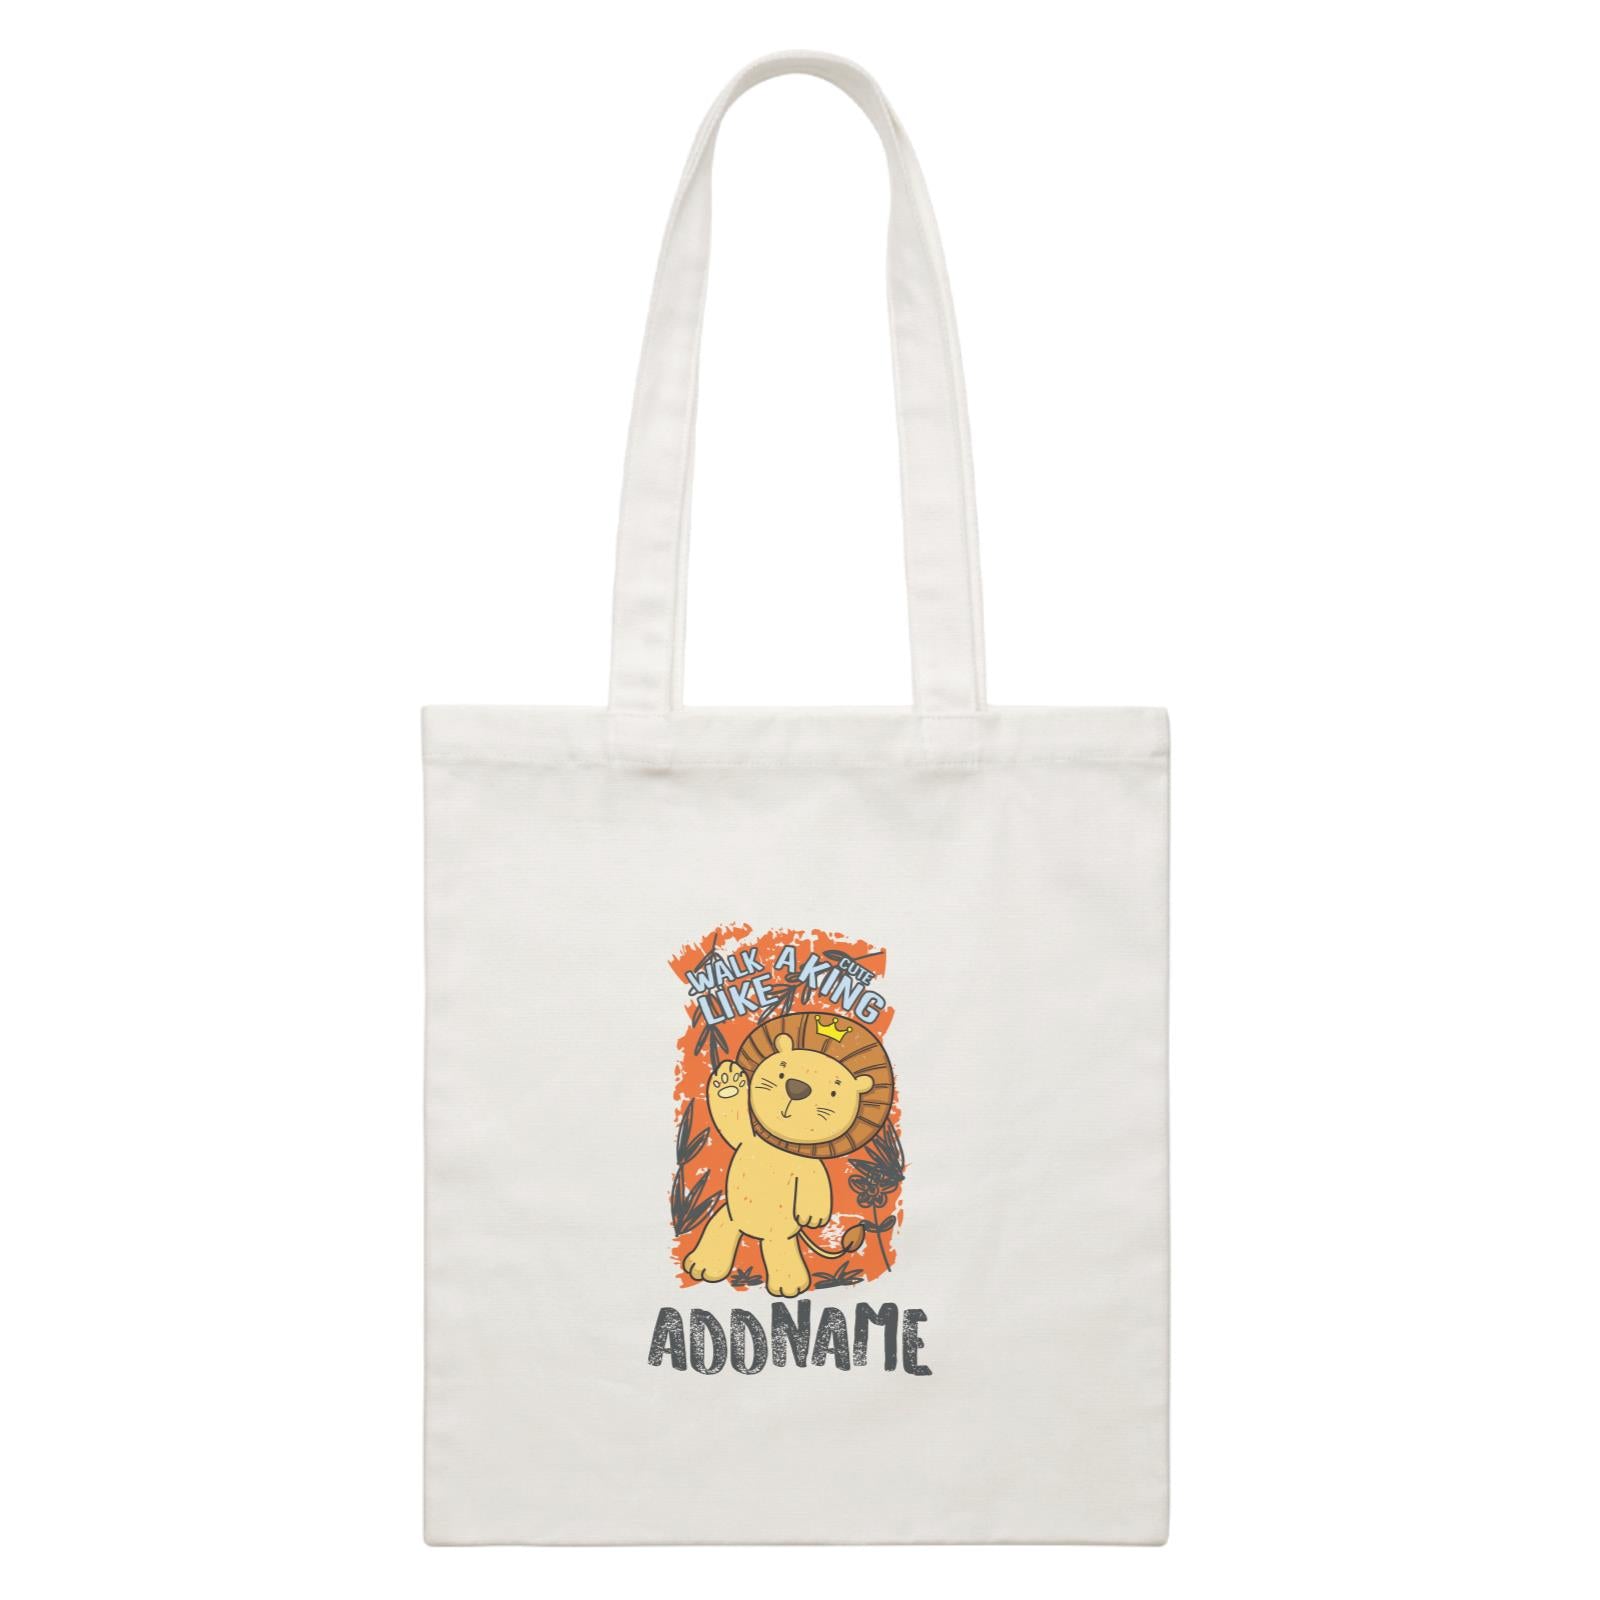 Cool Cute Animals Lion Walk Like A Cute King Addname White Canvas Bag